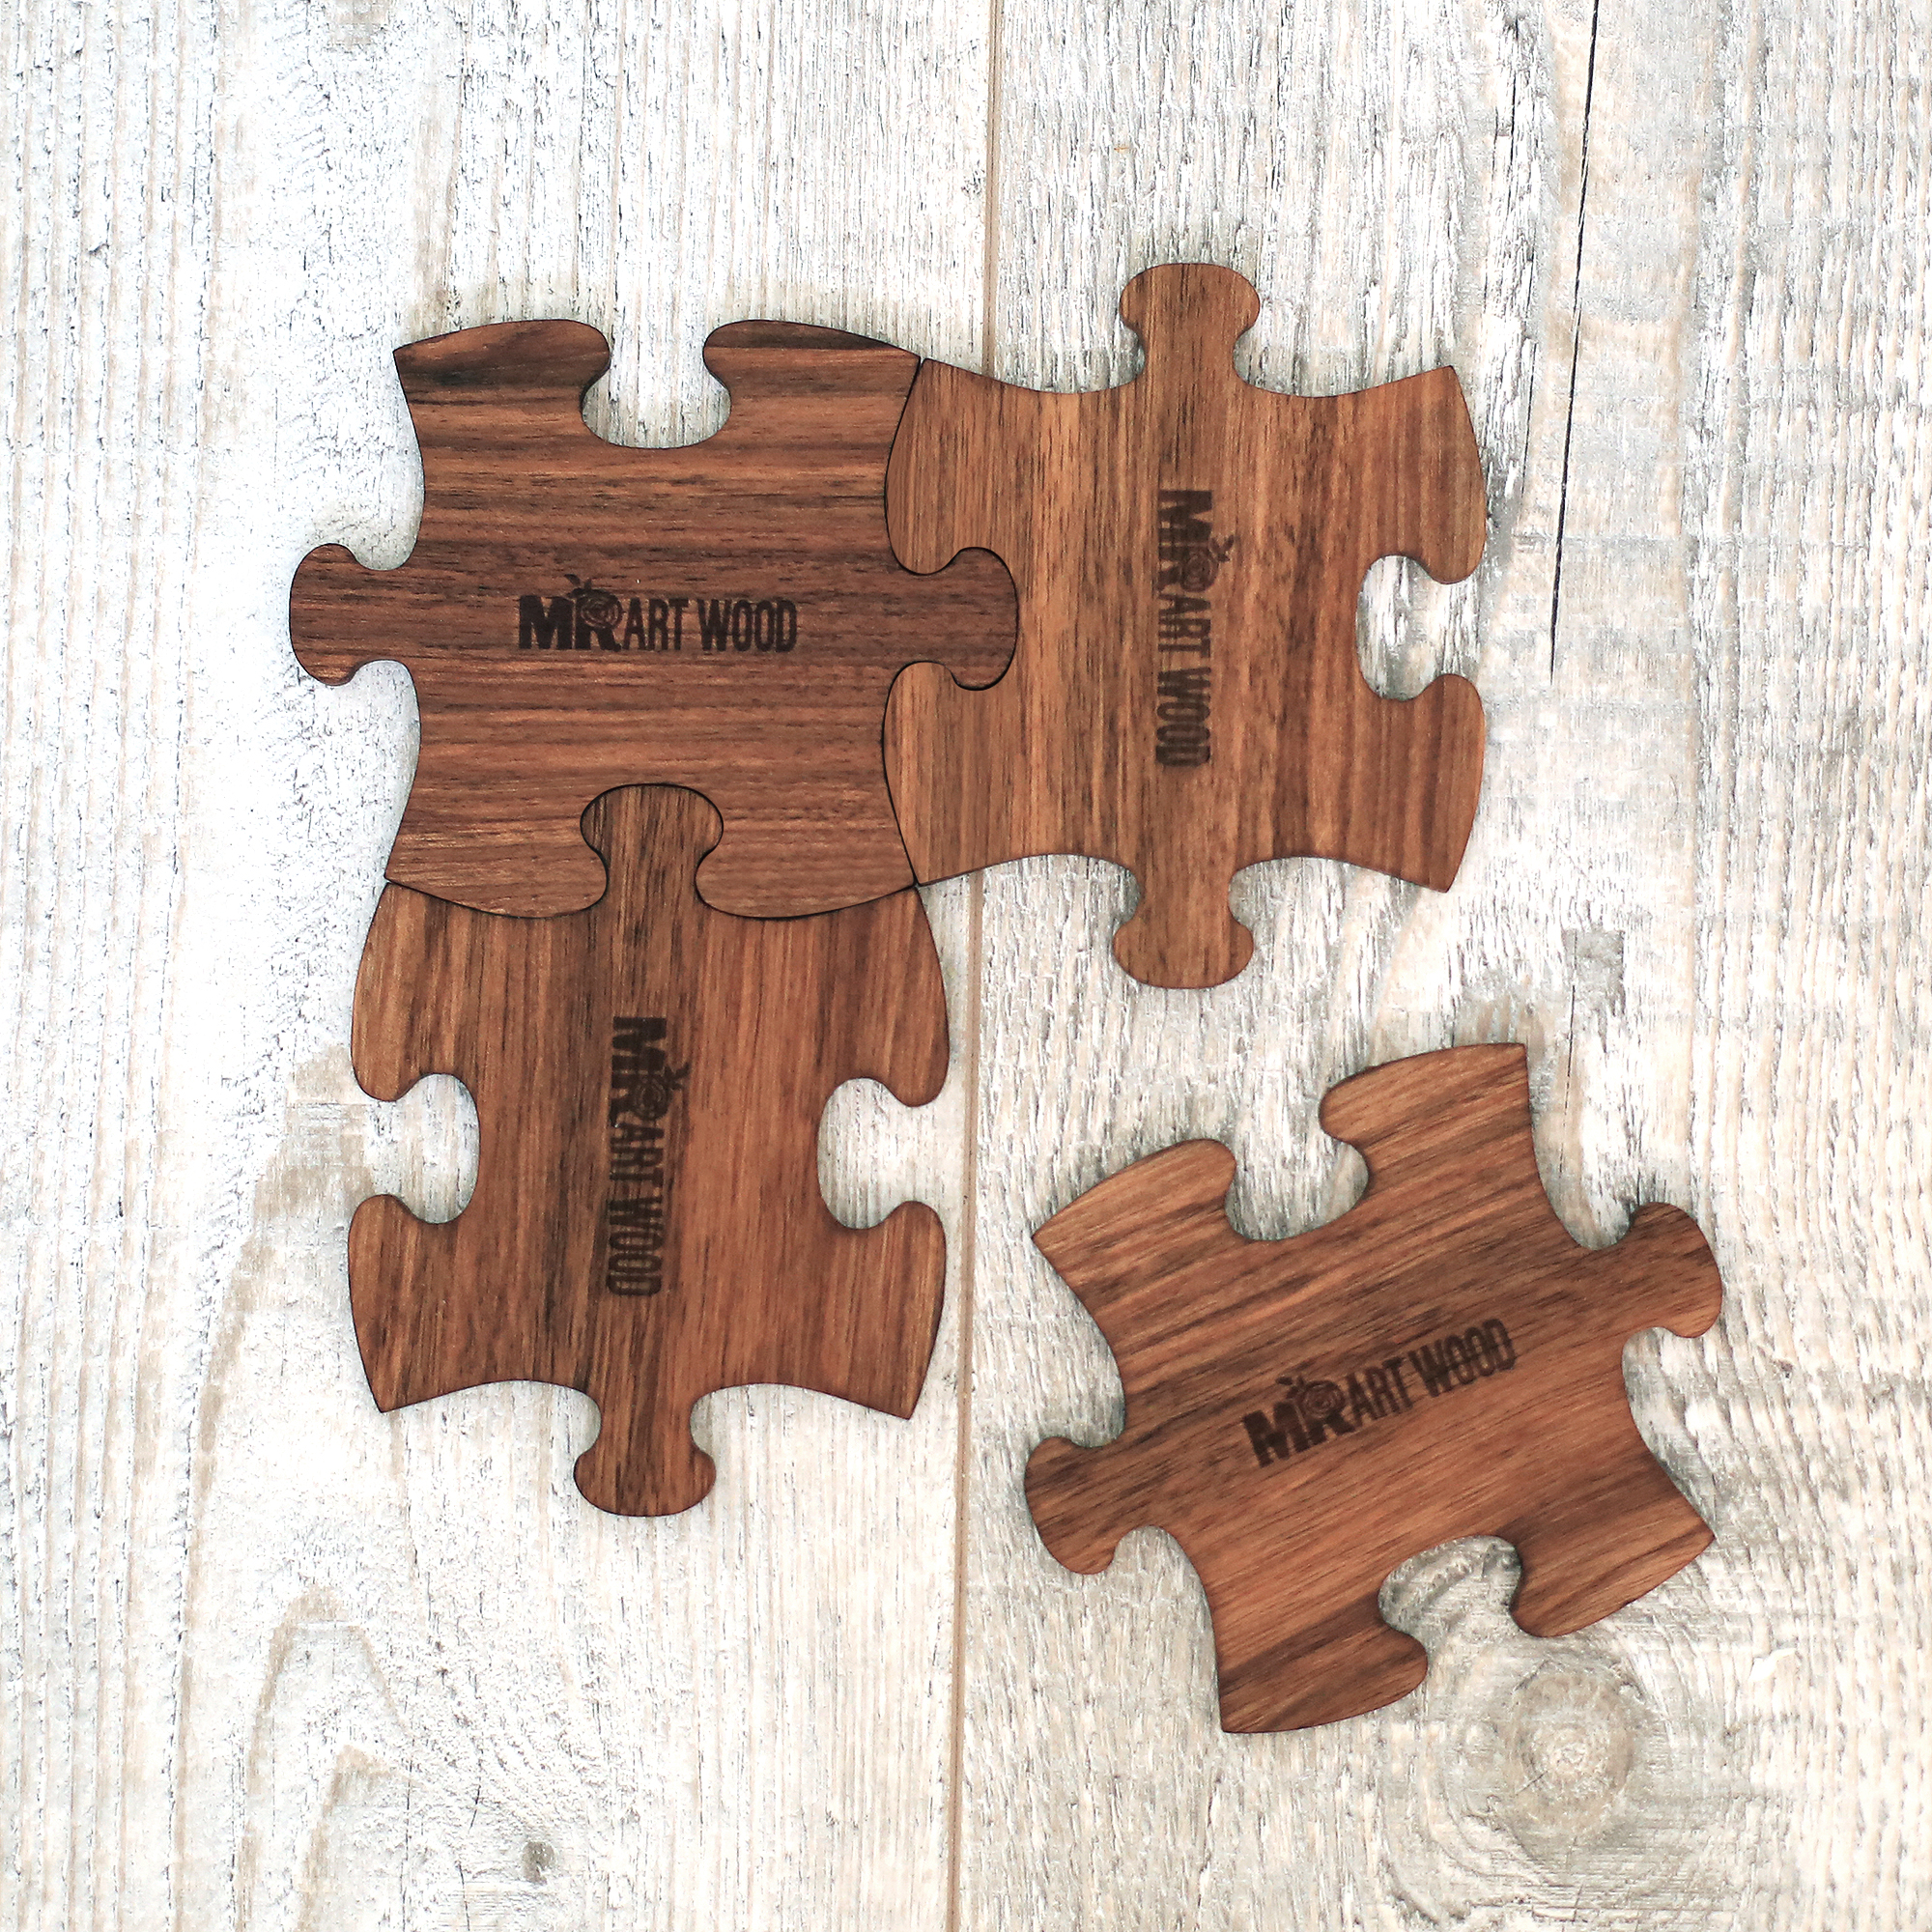 4 pcs/set Wooden Coasters for Drinks - Black Walnut Wood Drink